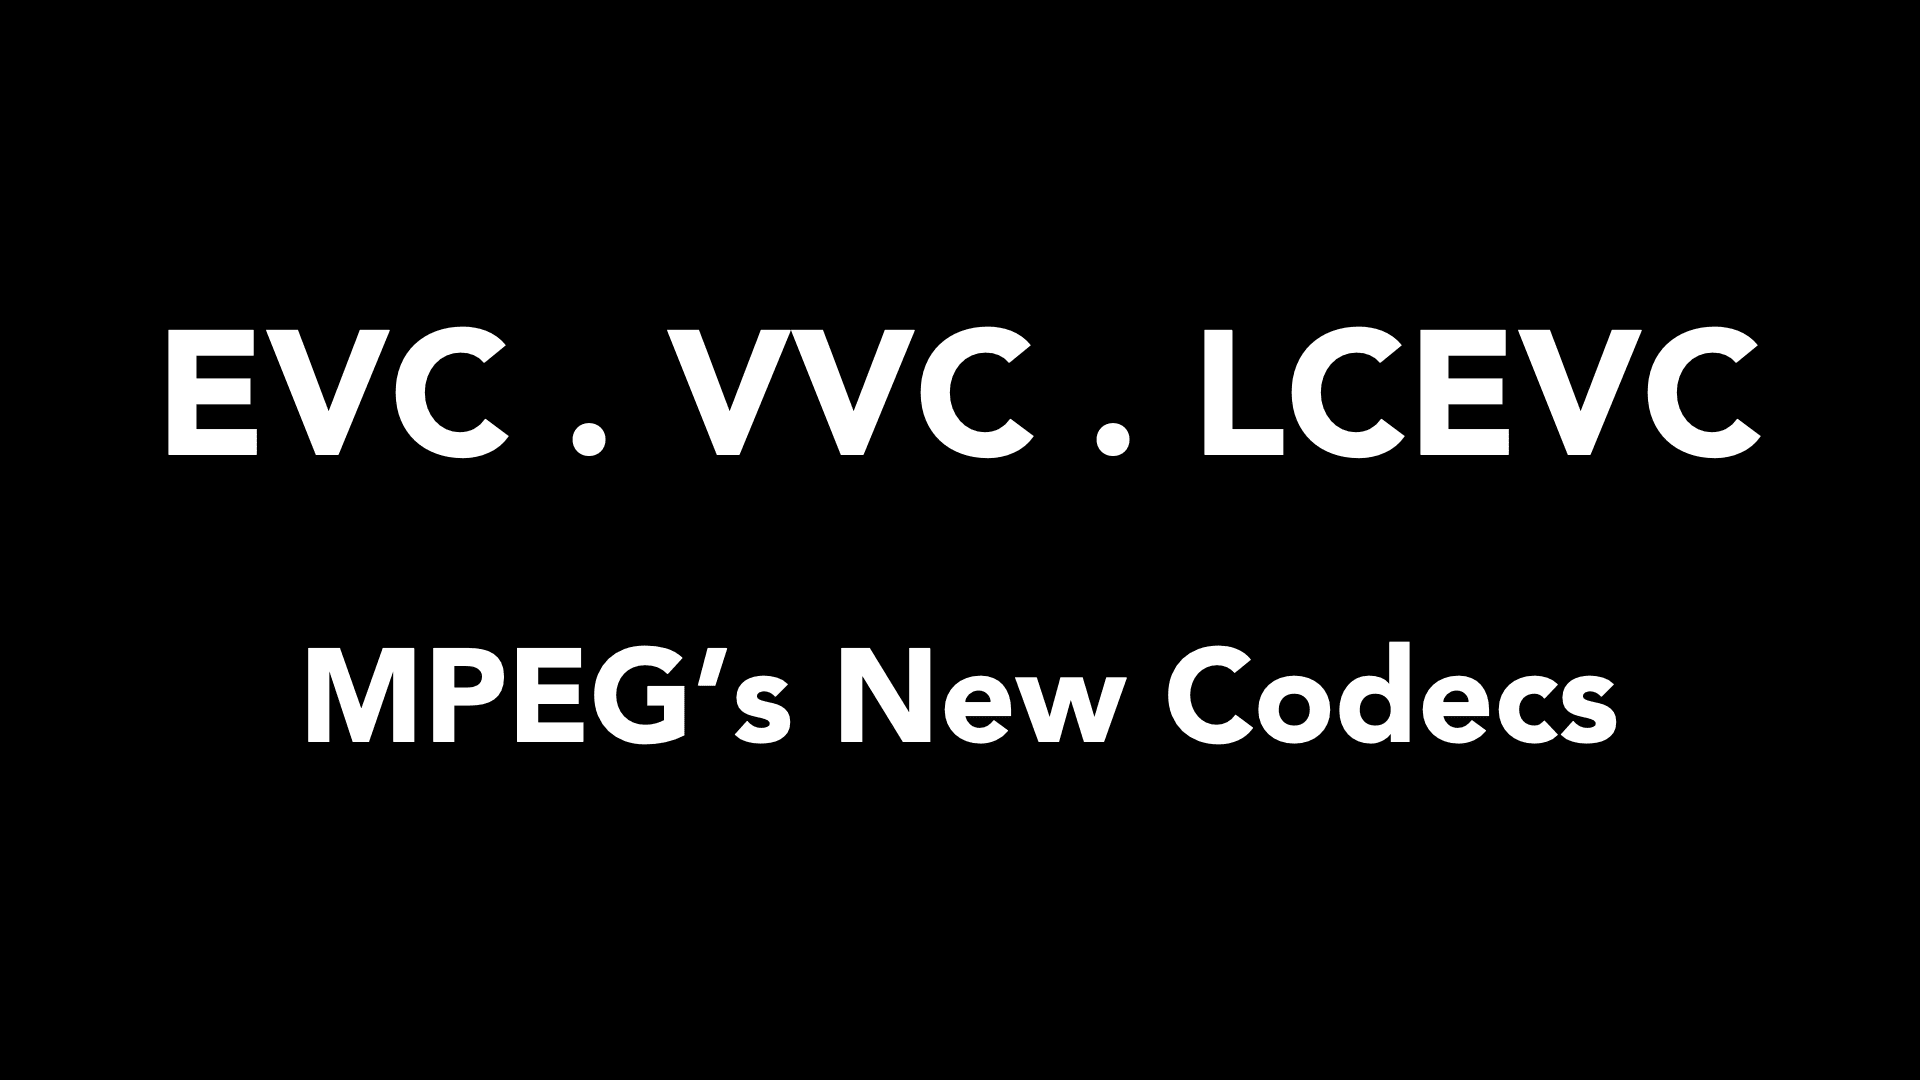 MPEG's New Video Codecs - VVC, EVC, LCEVC